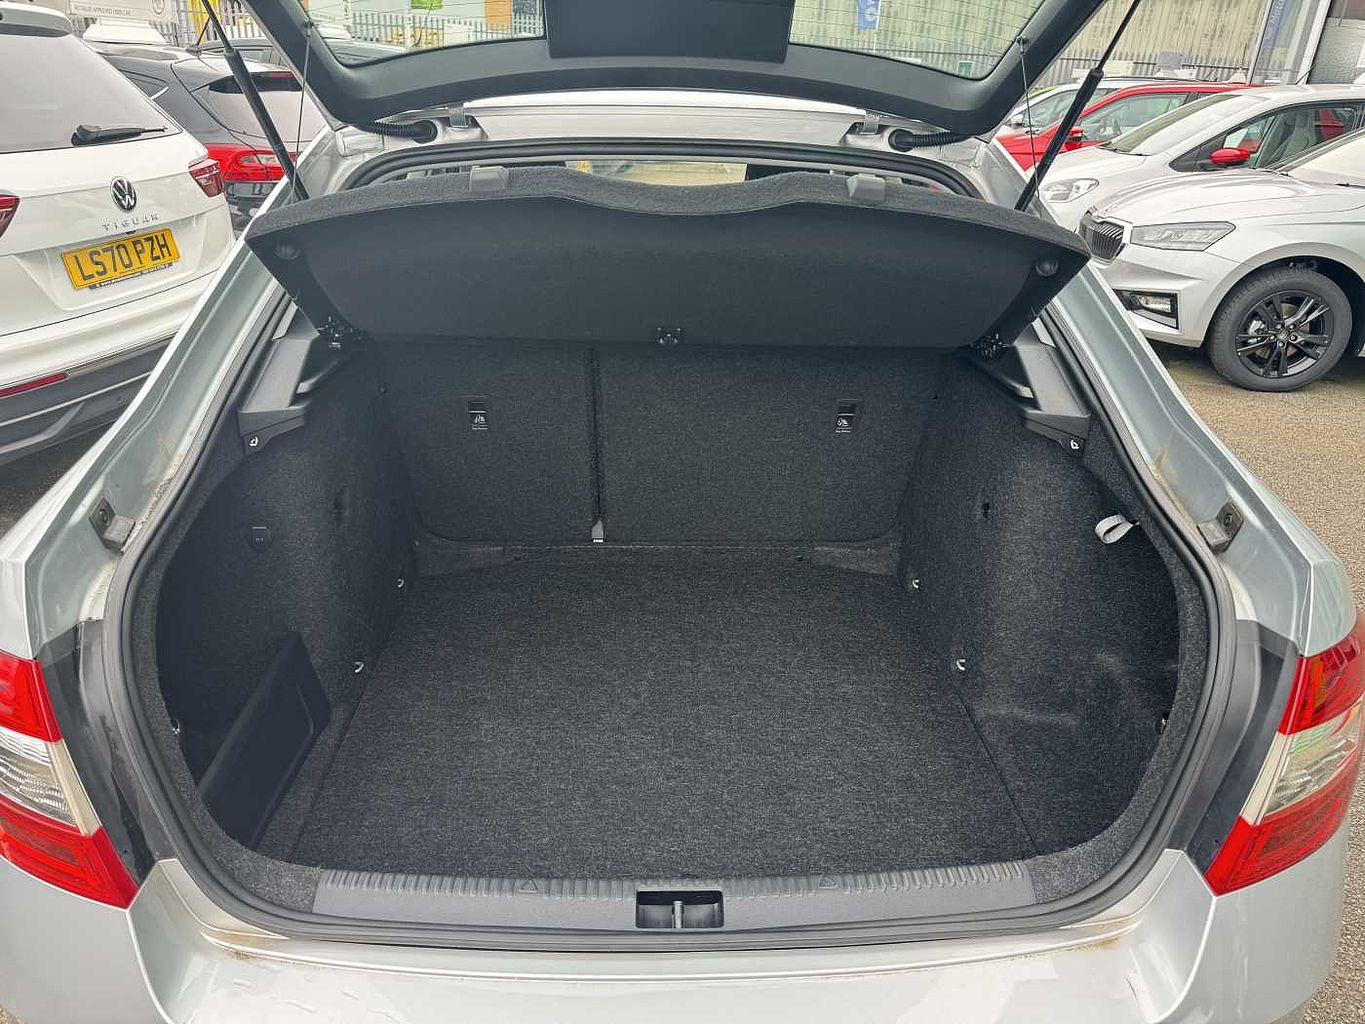 SKODA Octavia Hatchback (2017) 1.0 TSI SE (115PS)